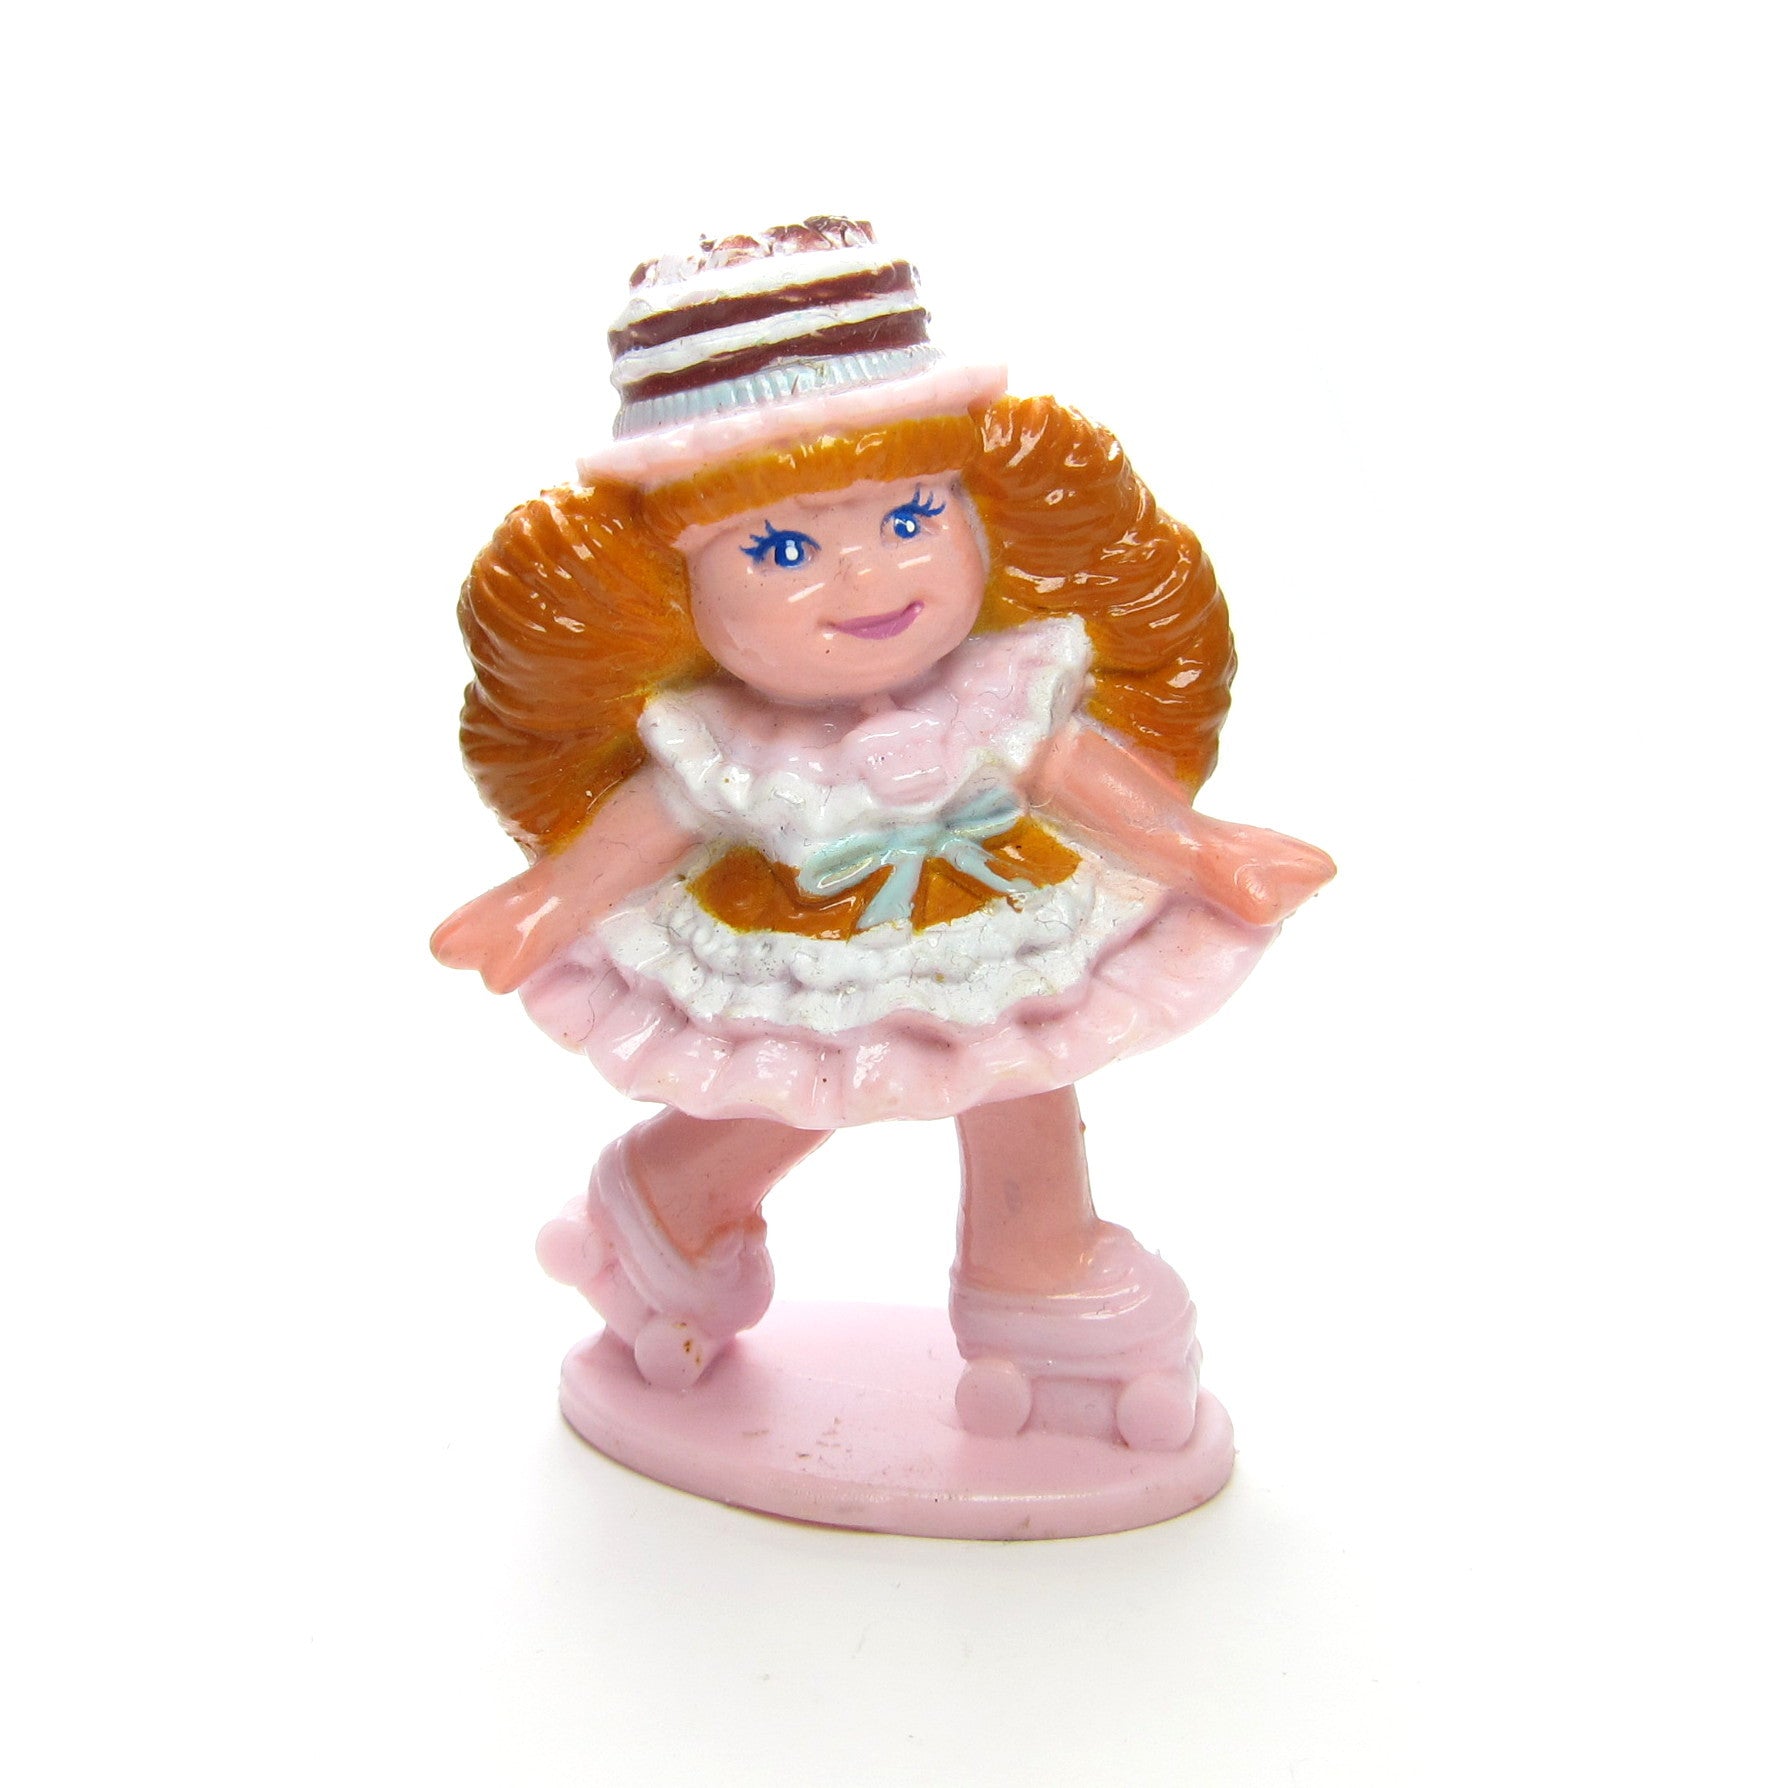 Chocolottie on roller skates miniature figurine